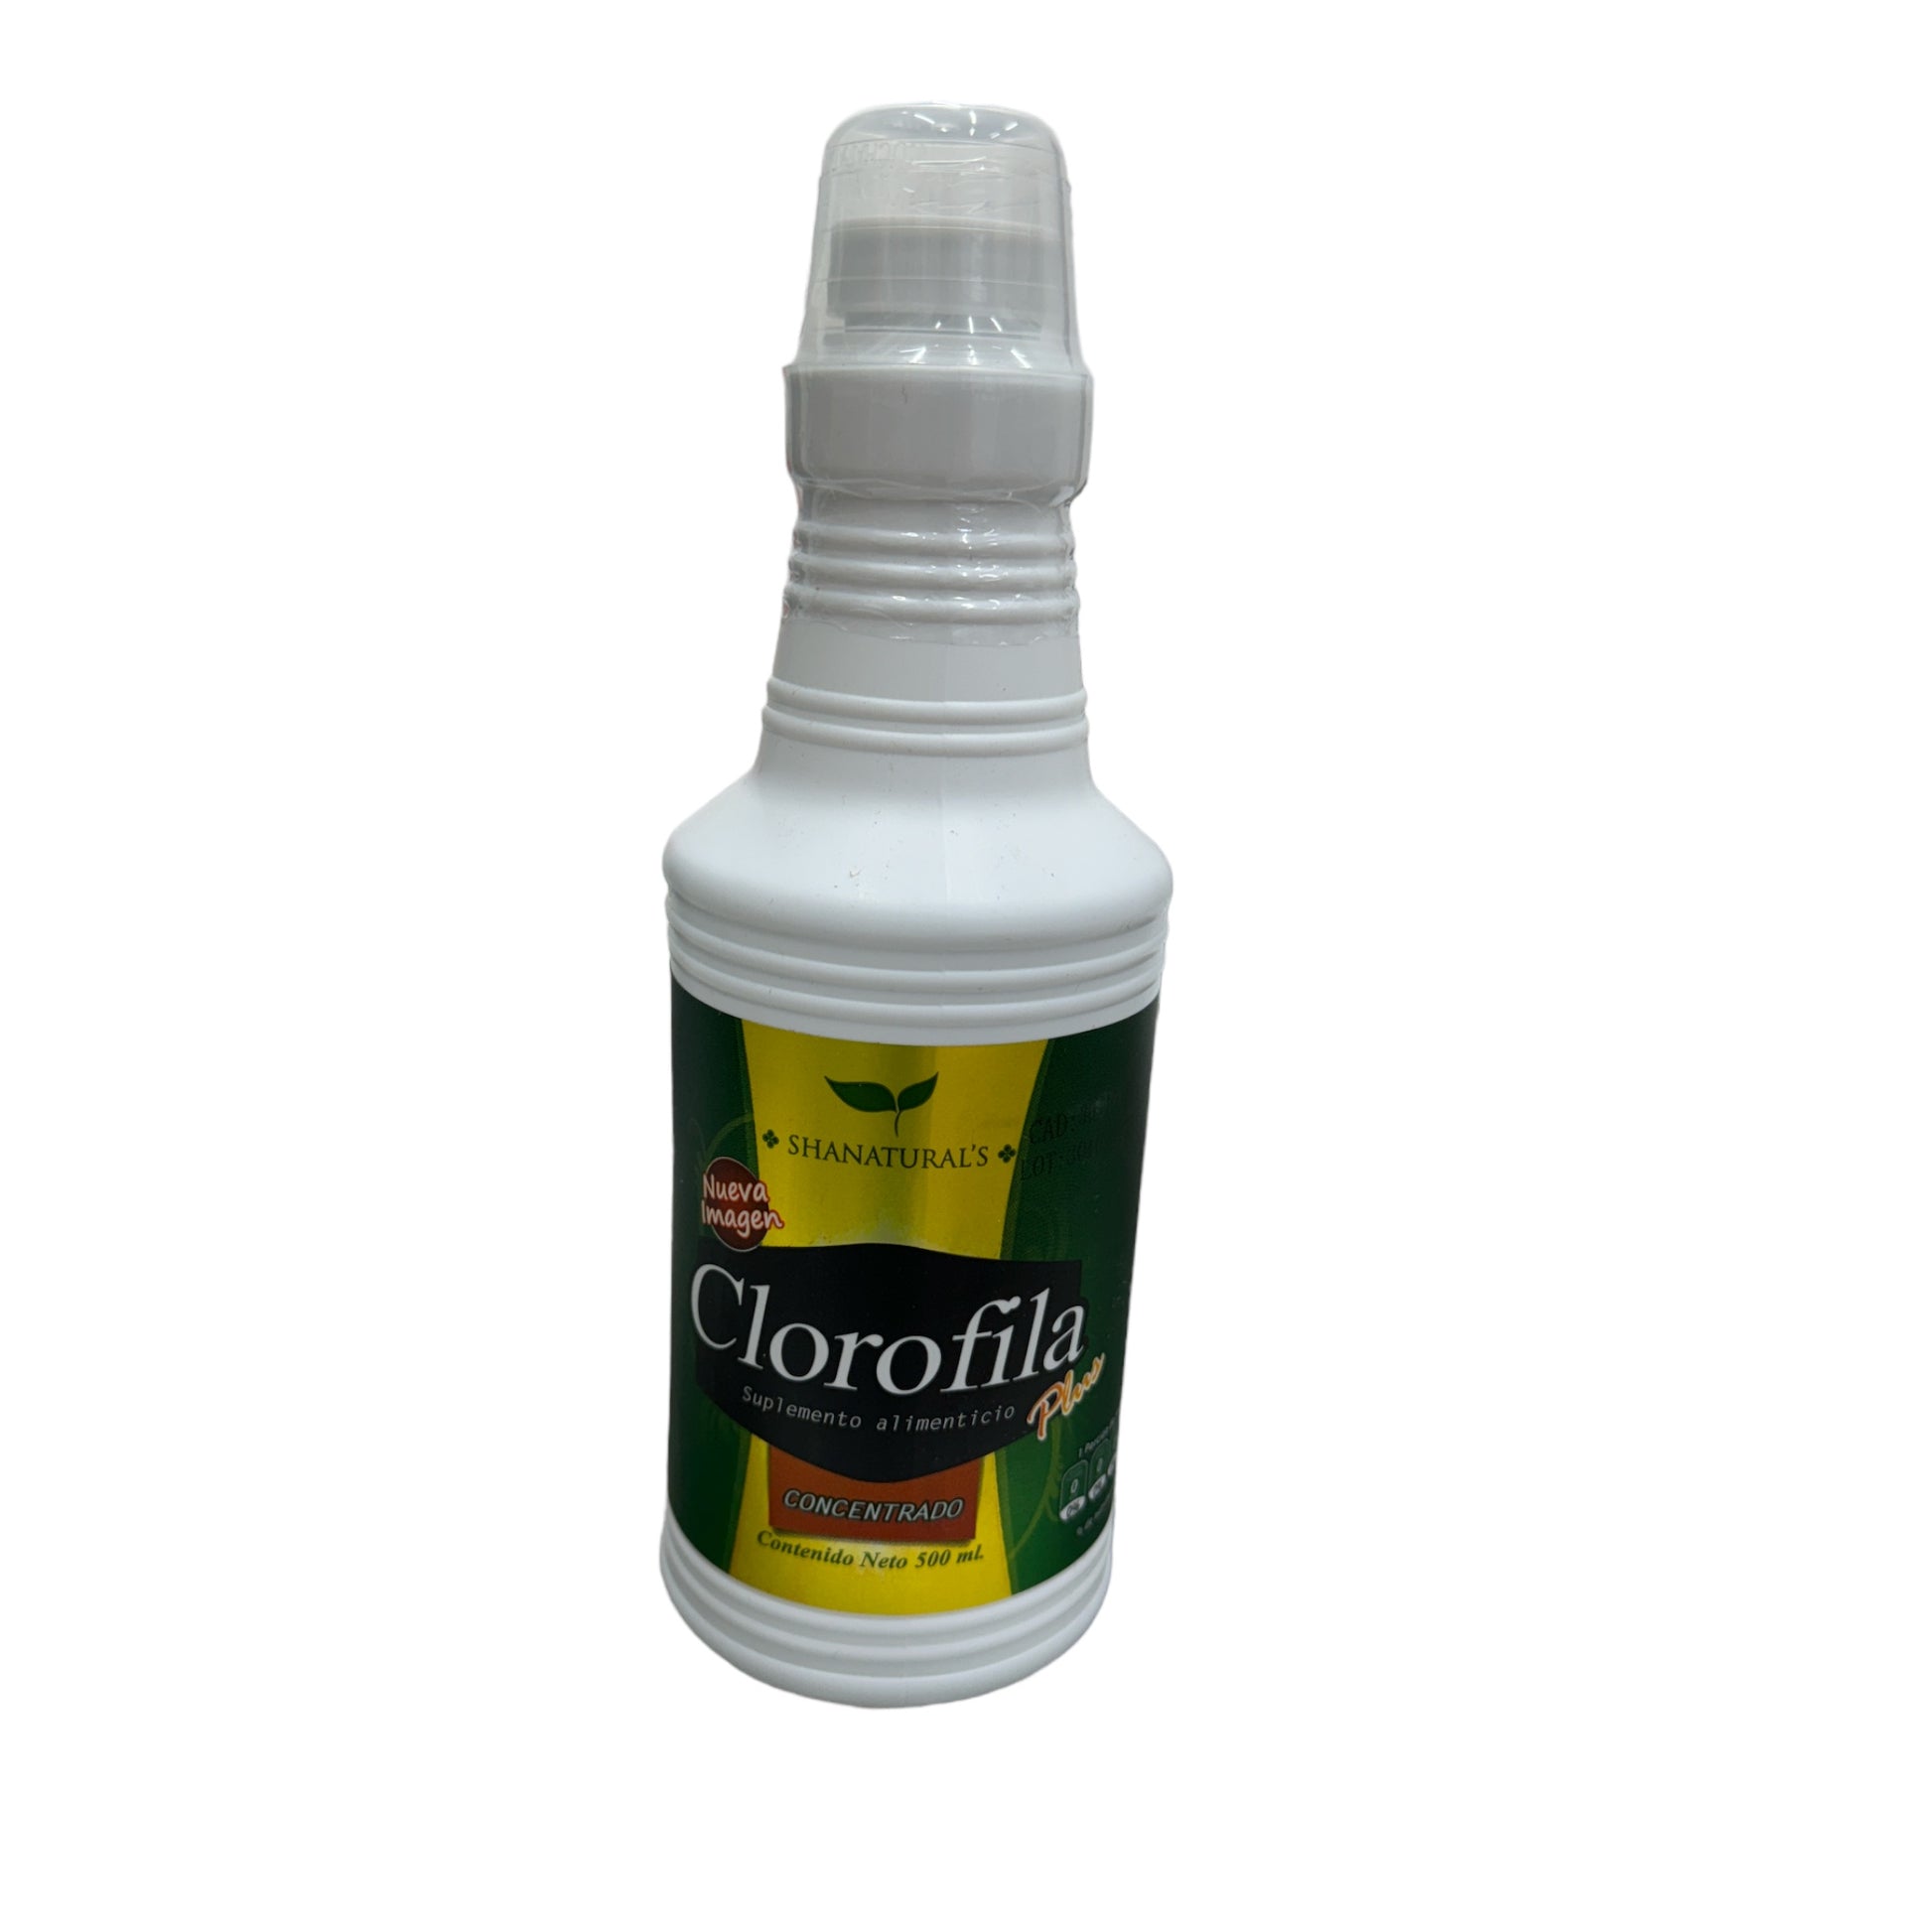 Clorofila 500 ml Shanatural's